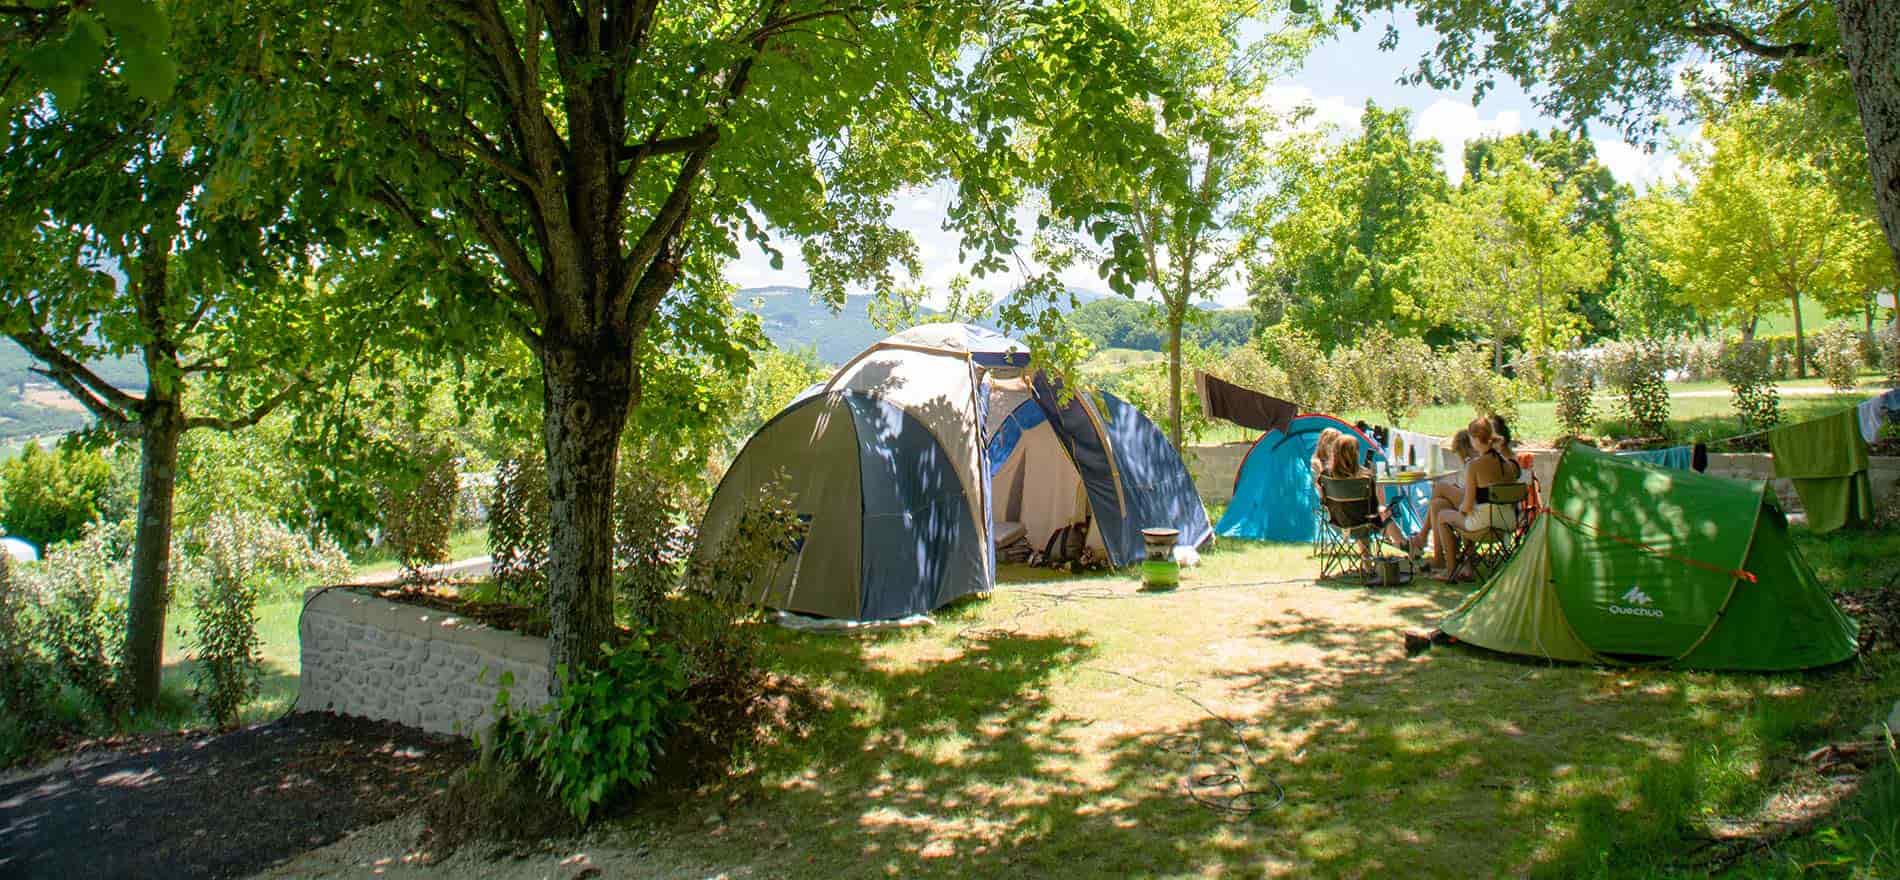 https://img.yellohvillage.fr/var/plain_site/storage/images/site_marchand/nos_hebergements/nos_emplacements_de_camping/1088806-41-fre-FR/nos_emplacements_de_camping.jpg